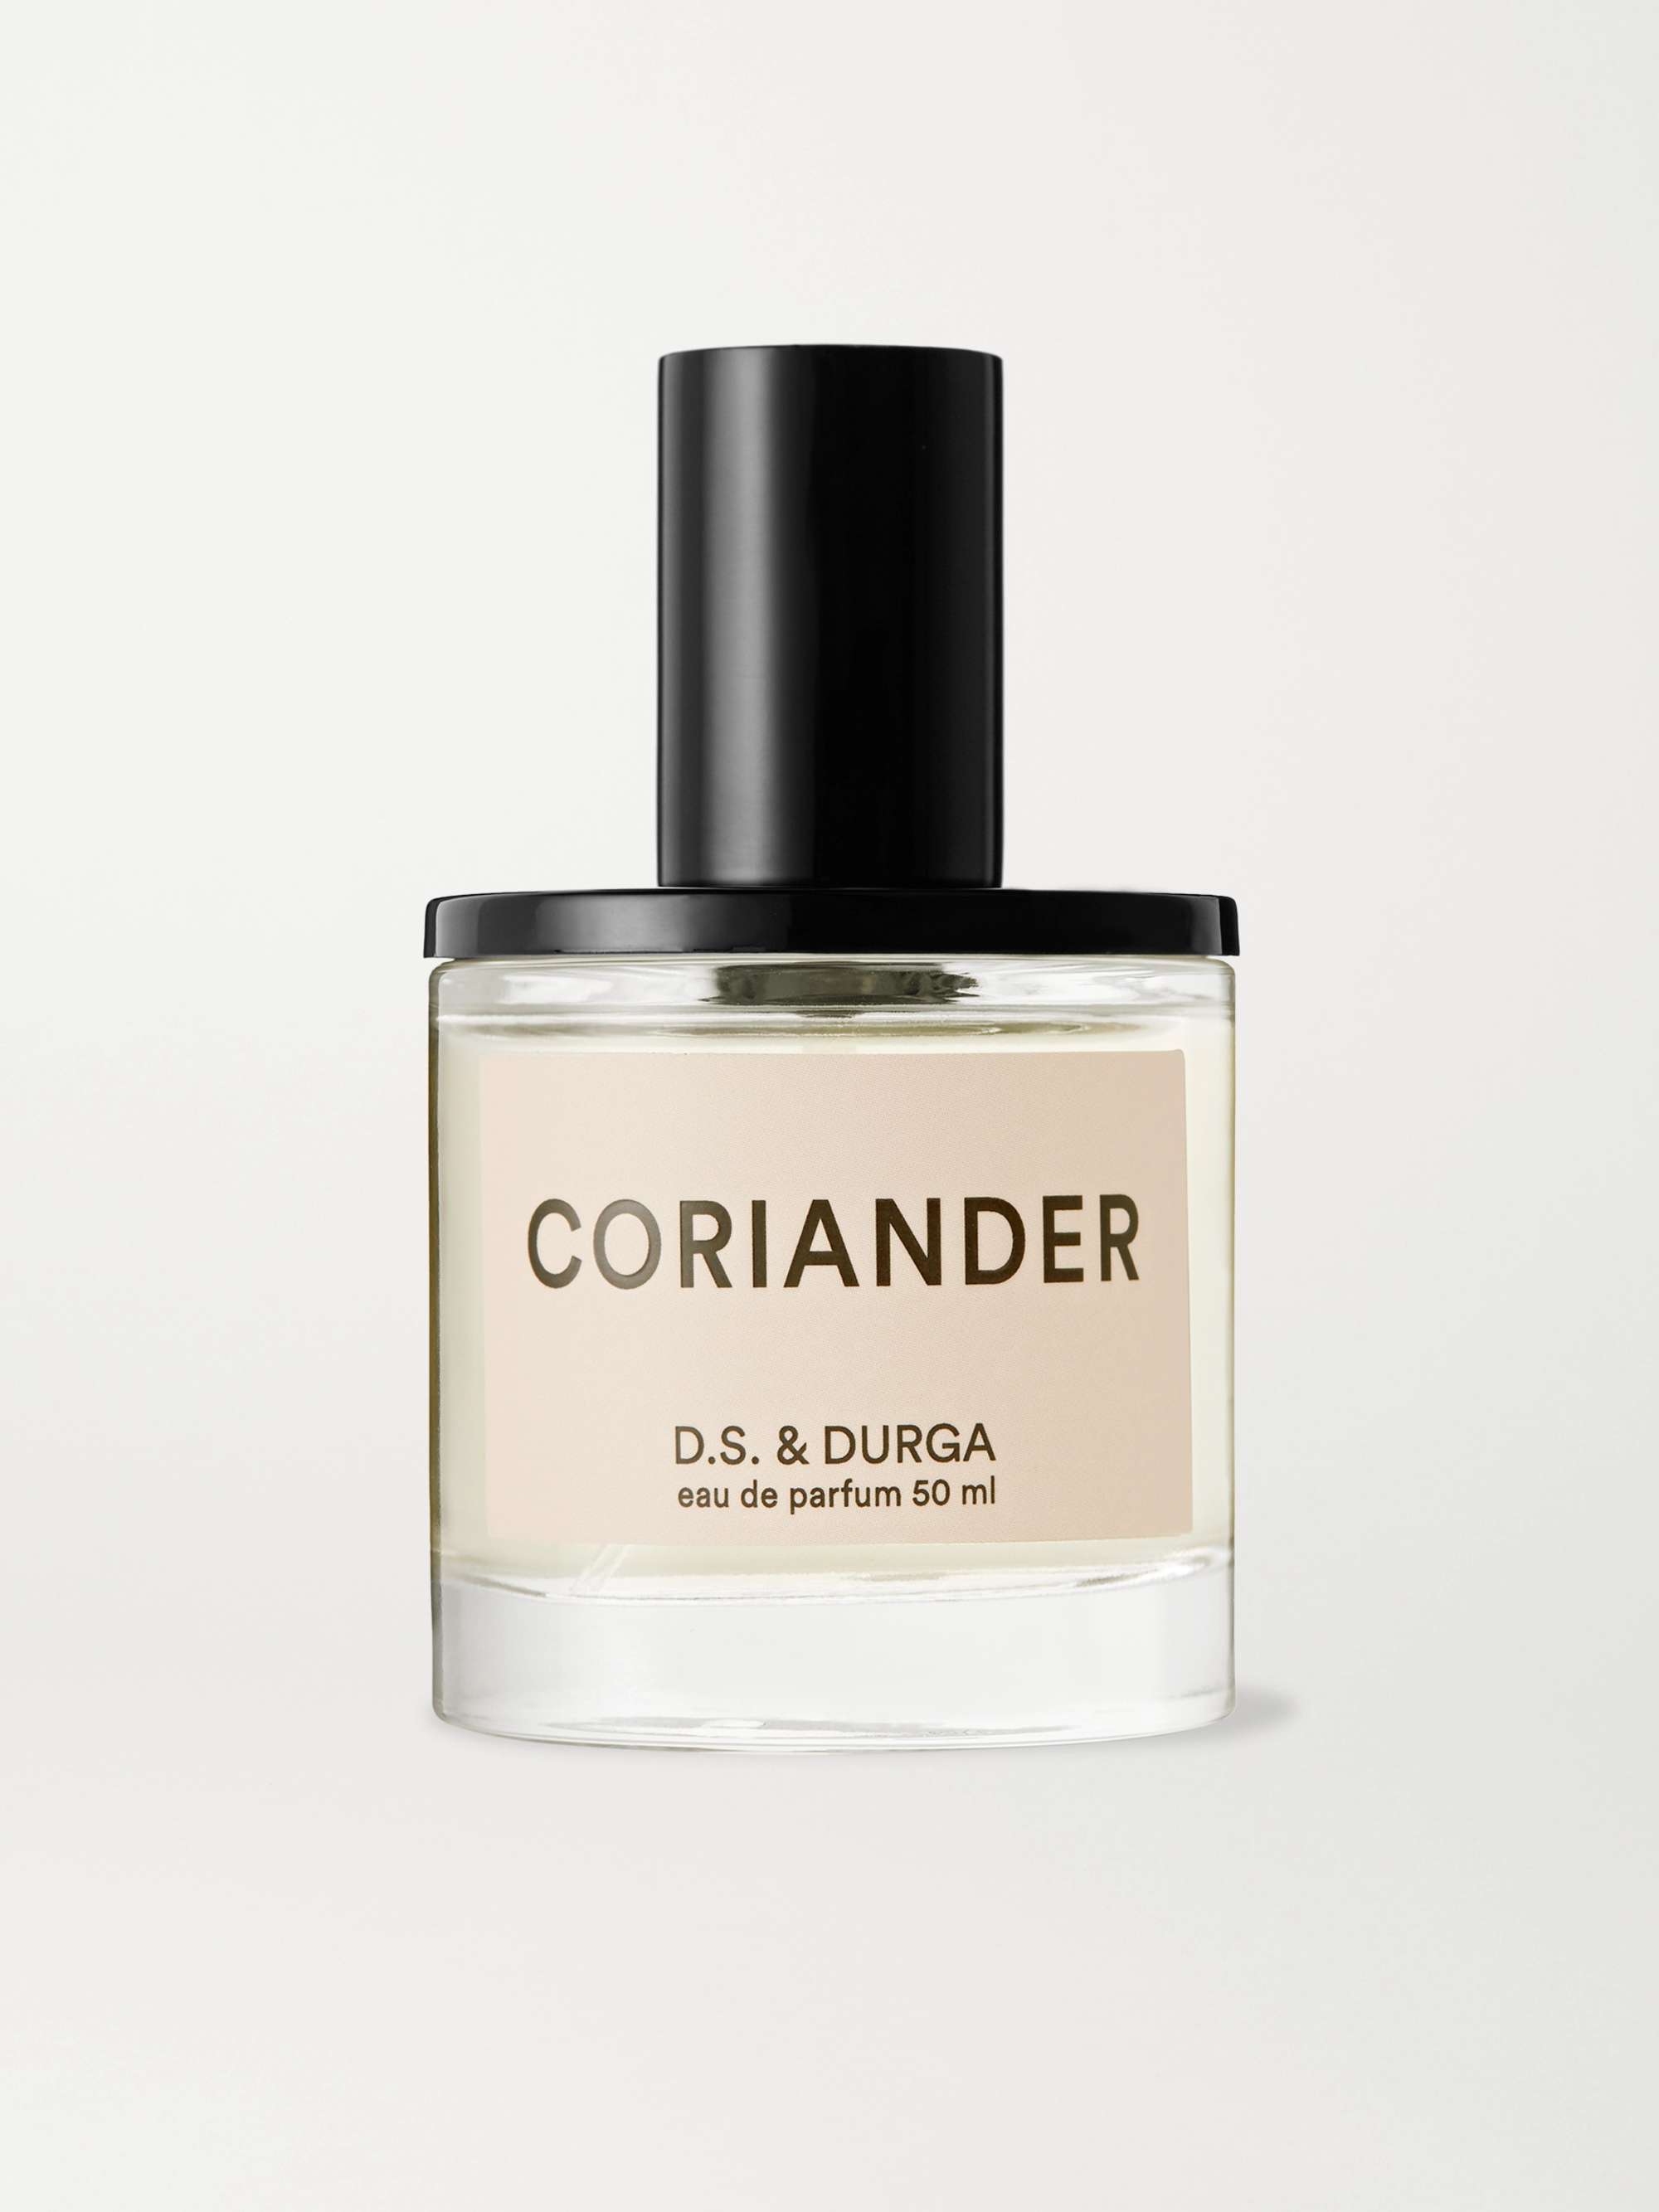 D.S. & DURGA Eau de Parfum - Coriander, 50ml